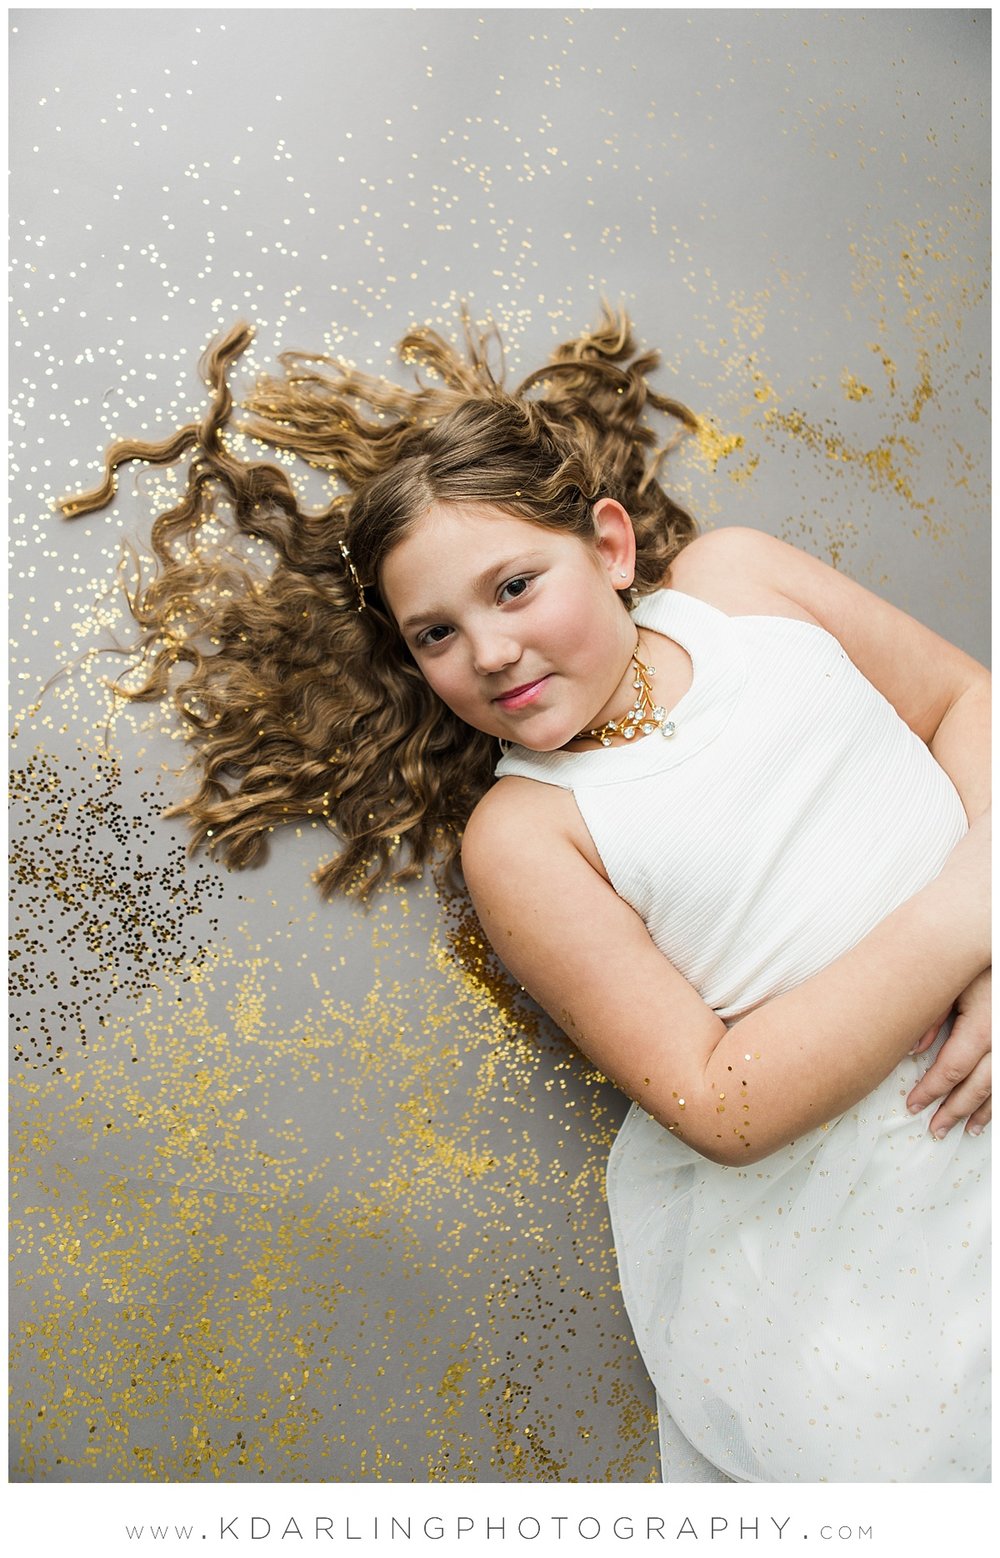 Tween girl in white dress laying in glitter